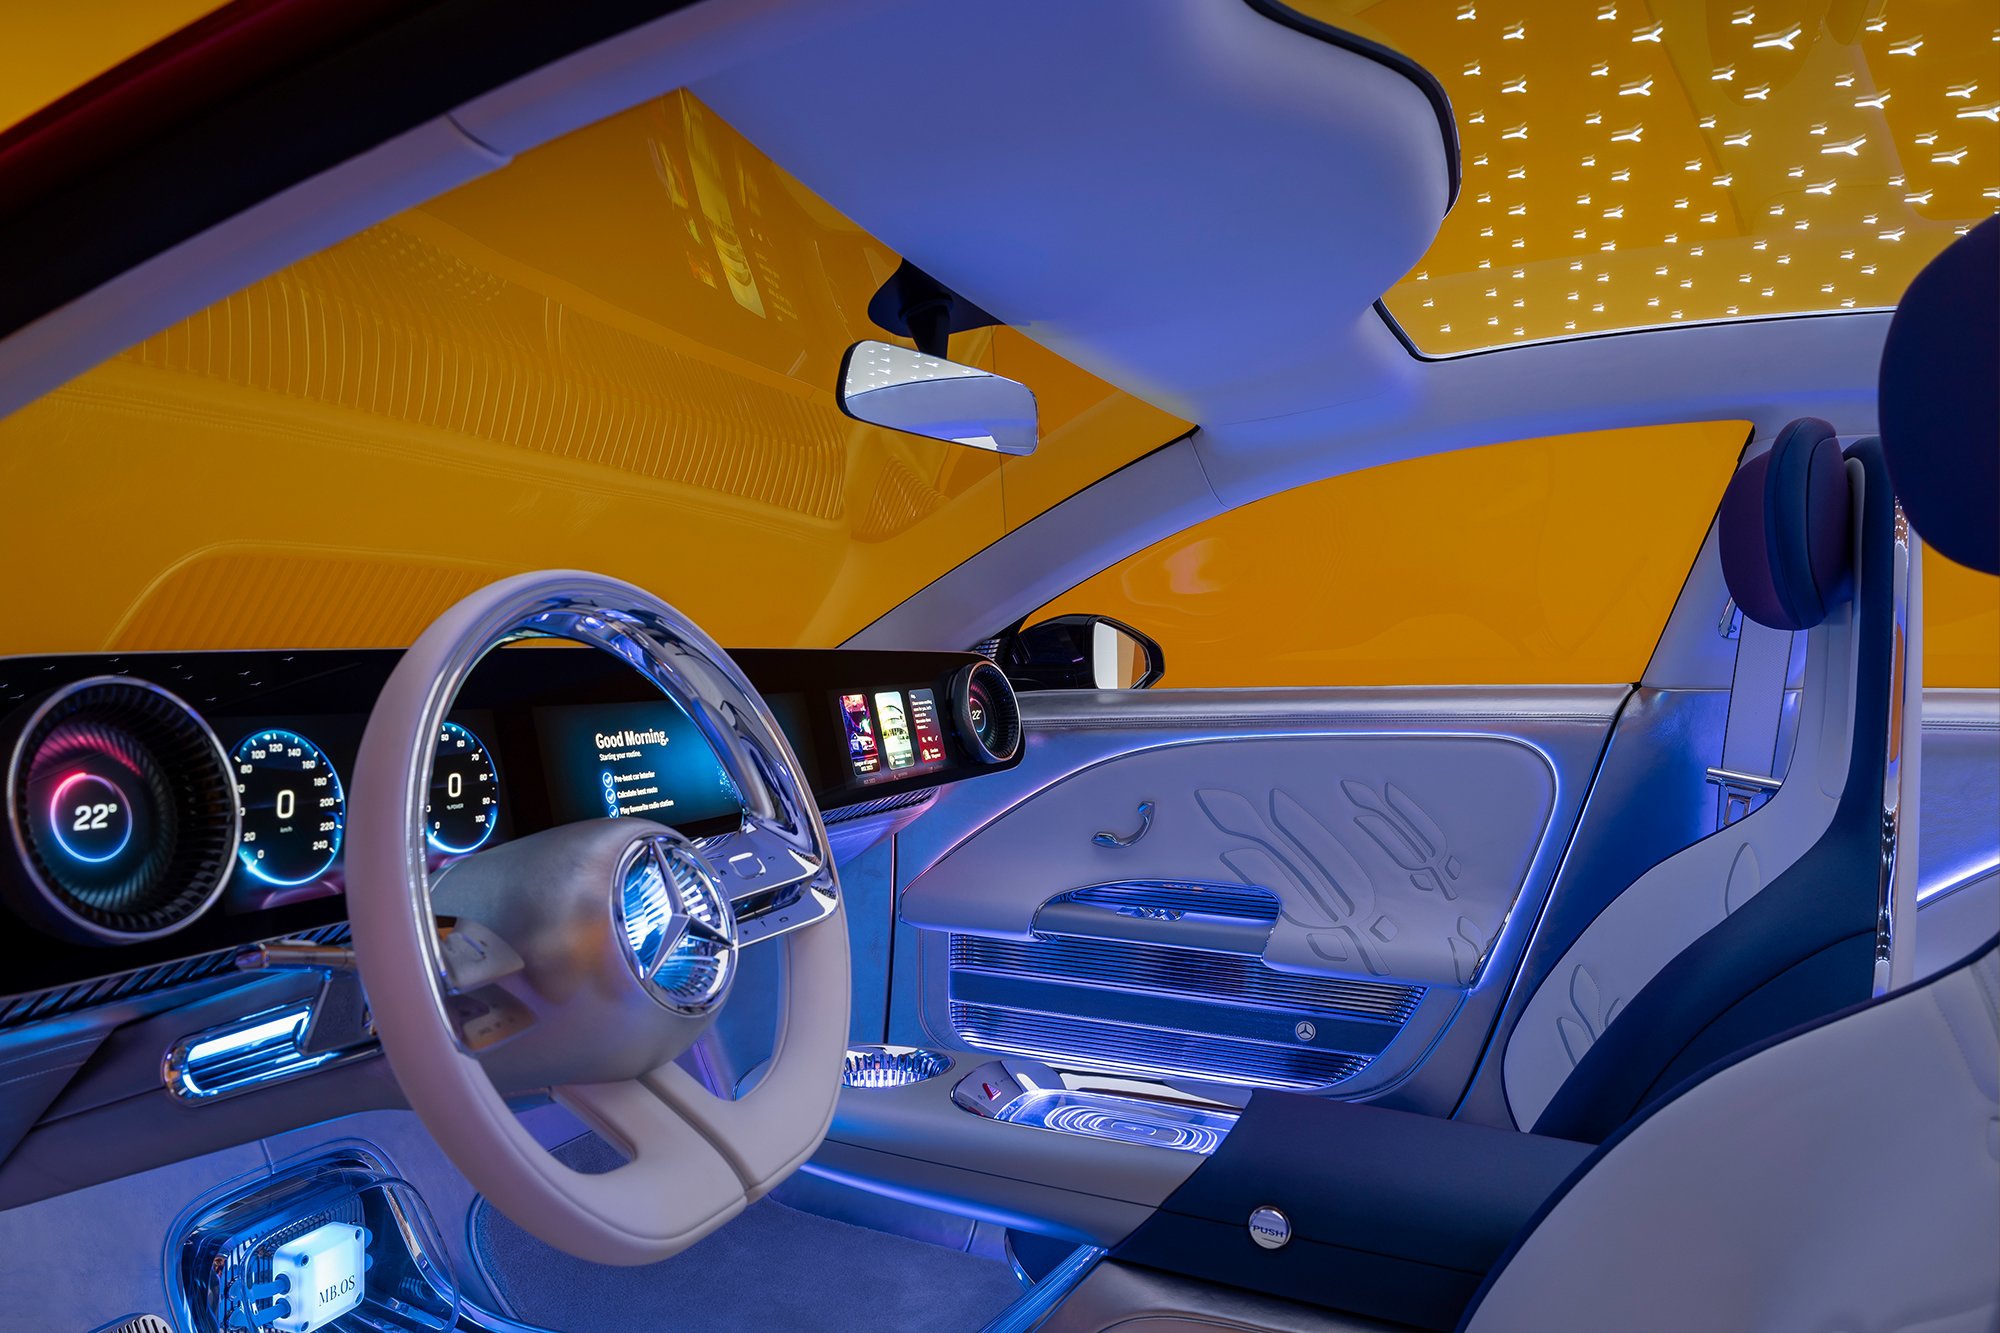 The interior design of the new Mercedes-Benz Concept CLA